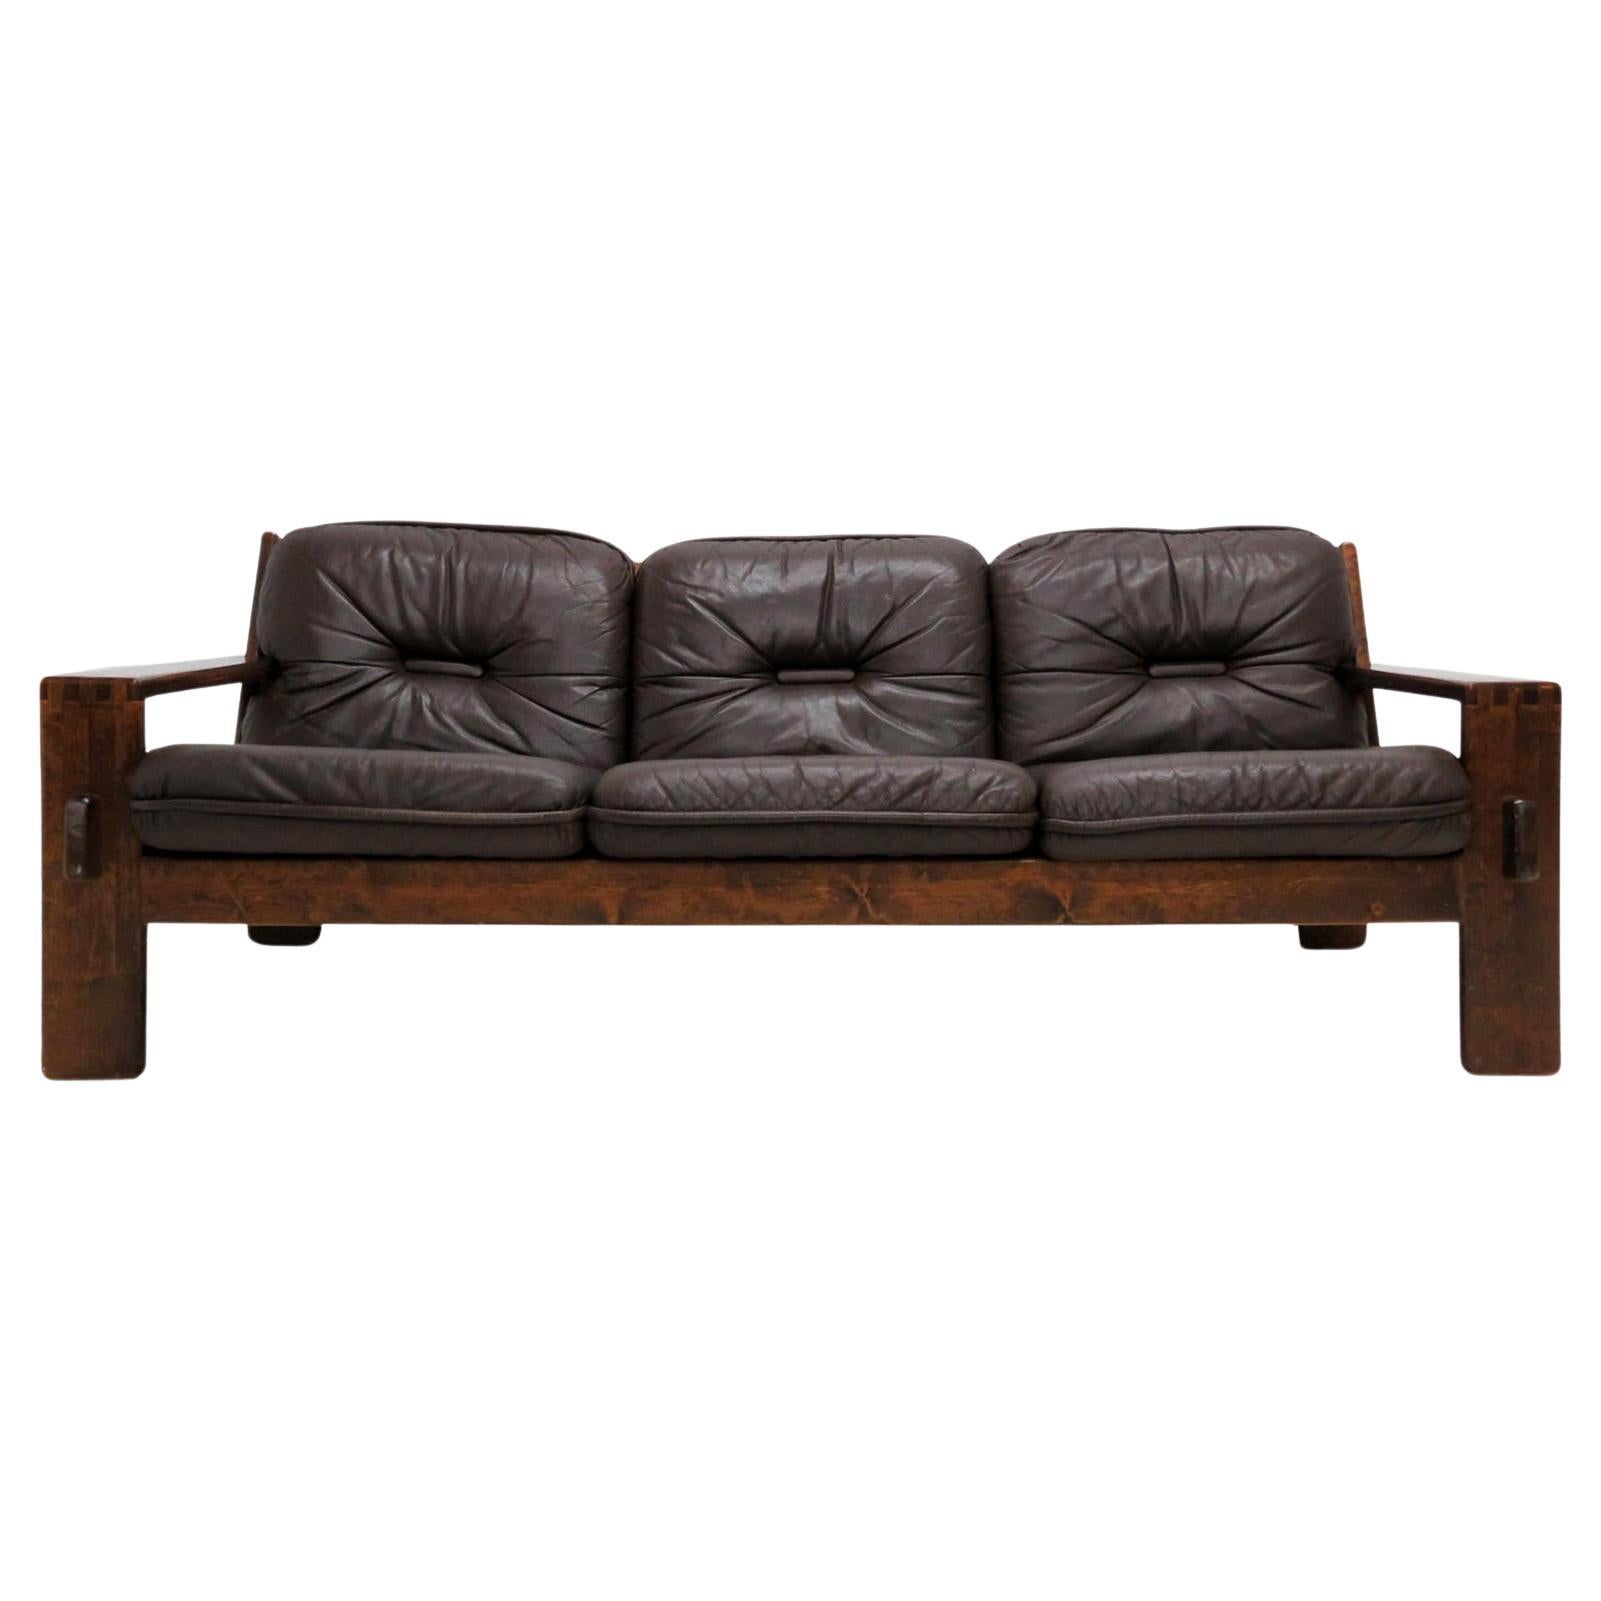 Esko Pajamies 'Bonanza' Leather Sofa, 1970 For Sale